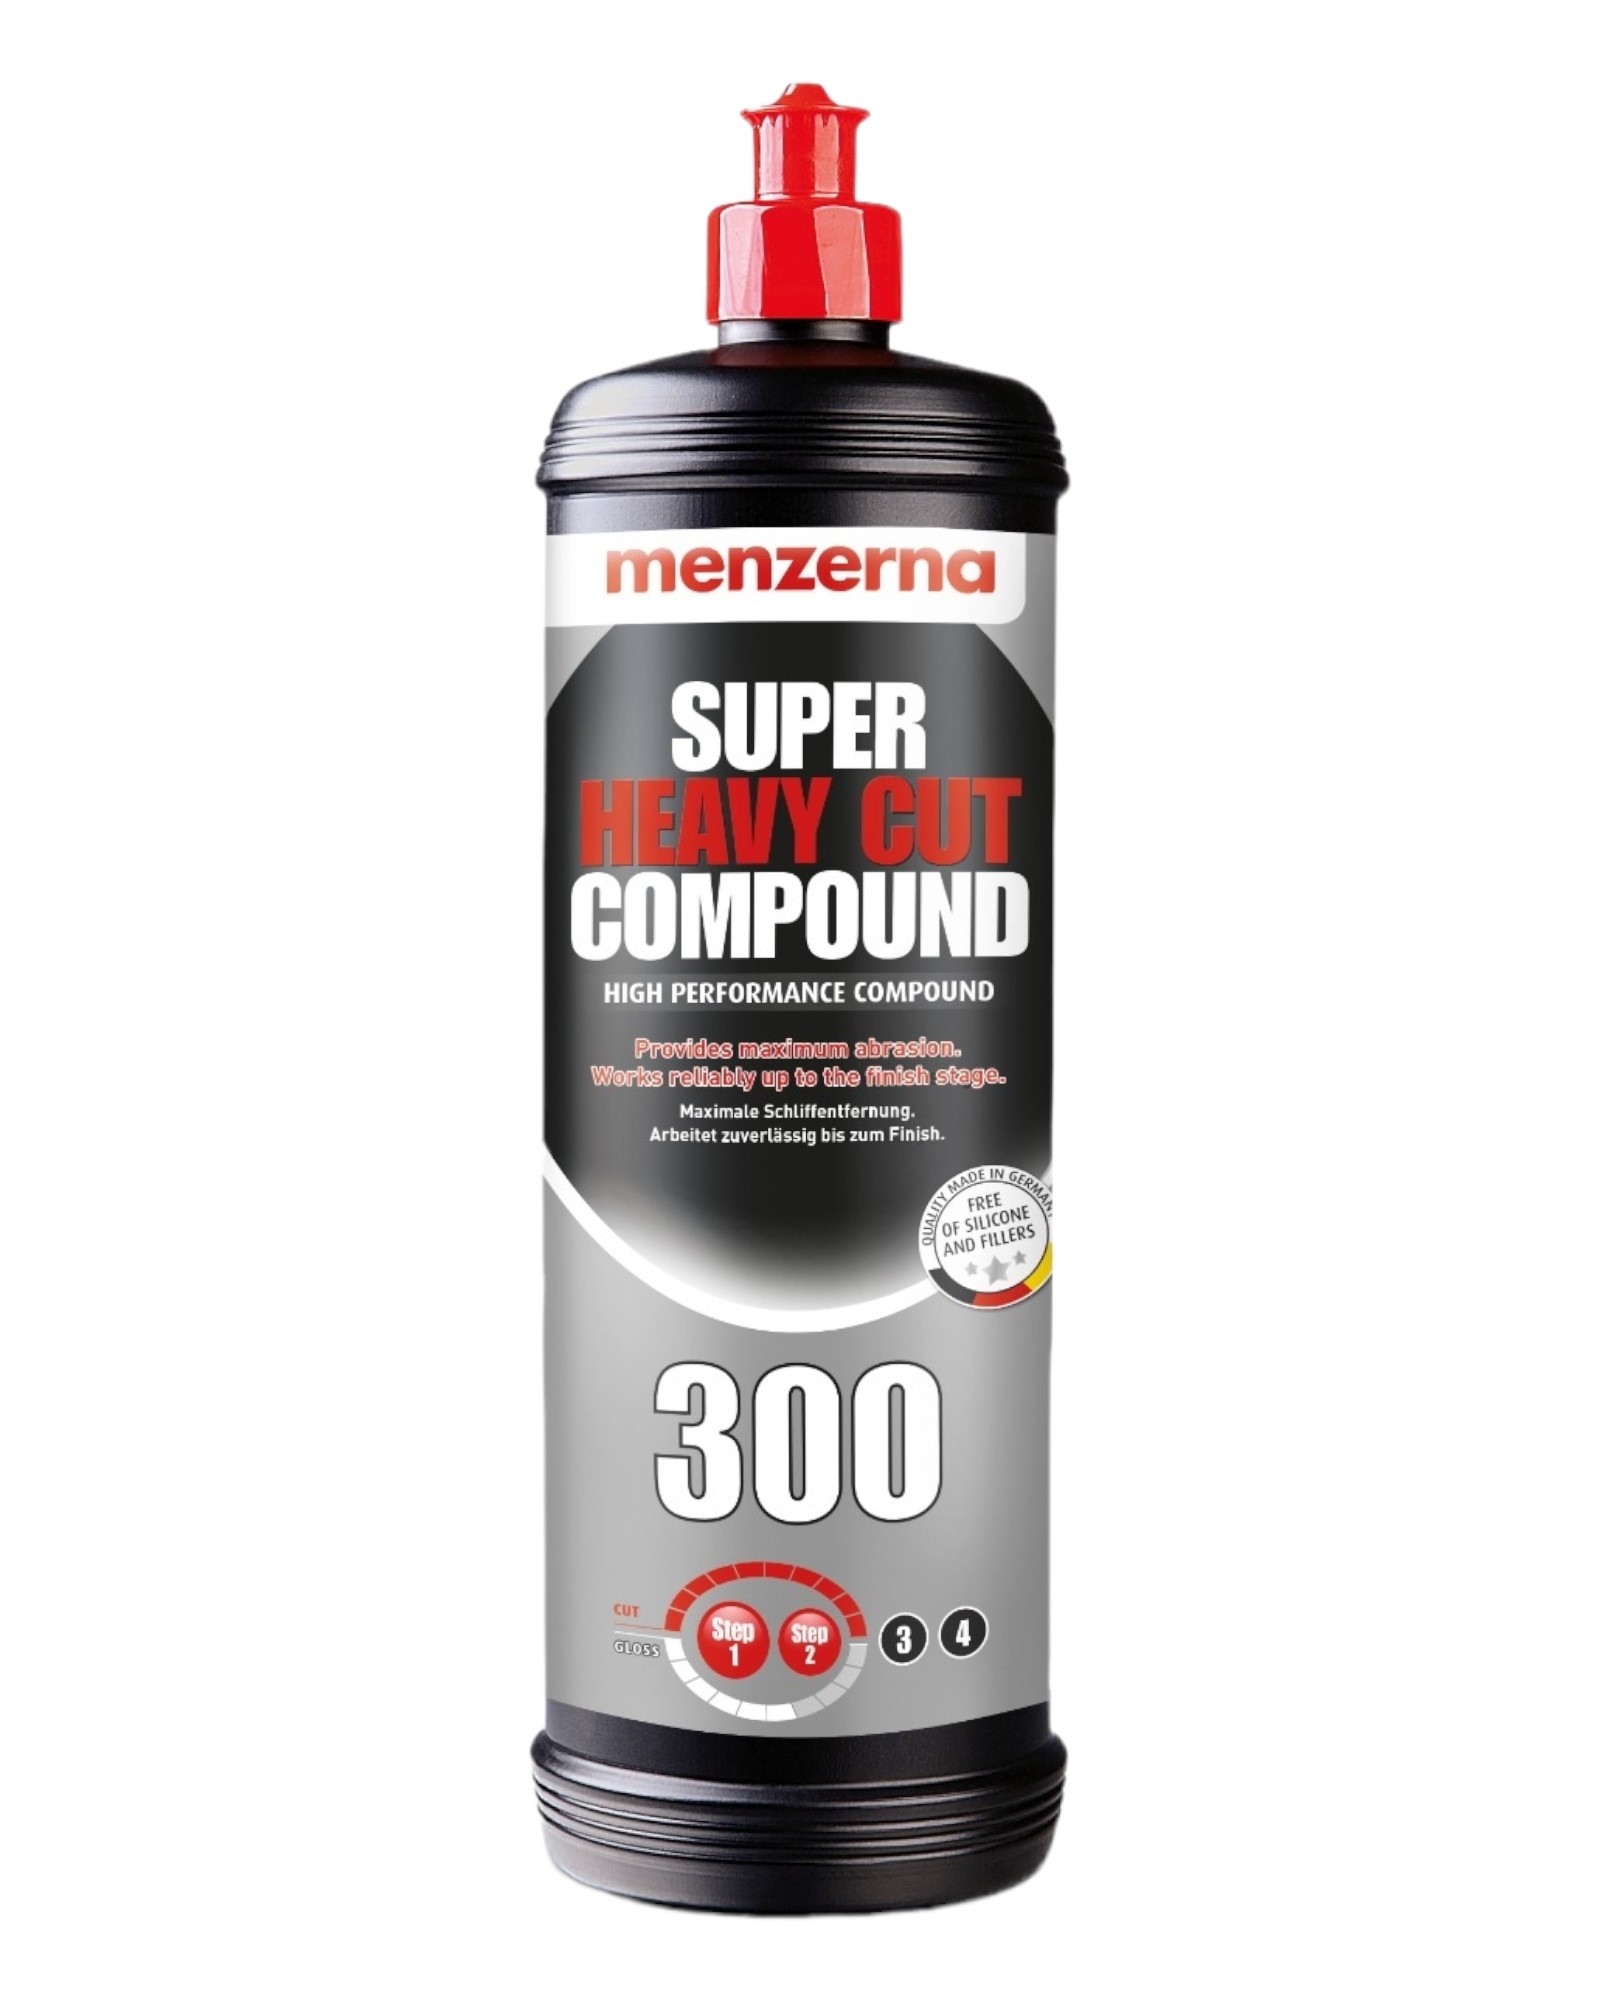 menzerna super heavy cut compound 300 1lt